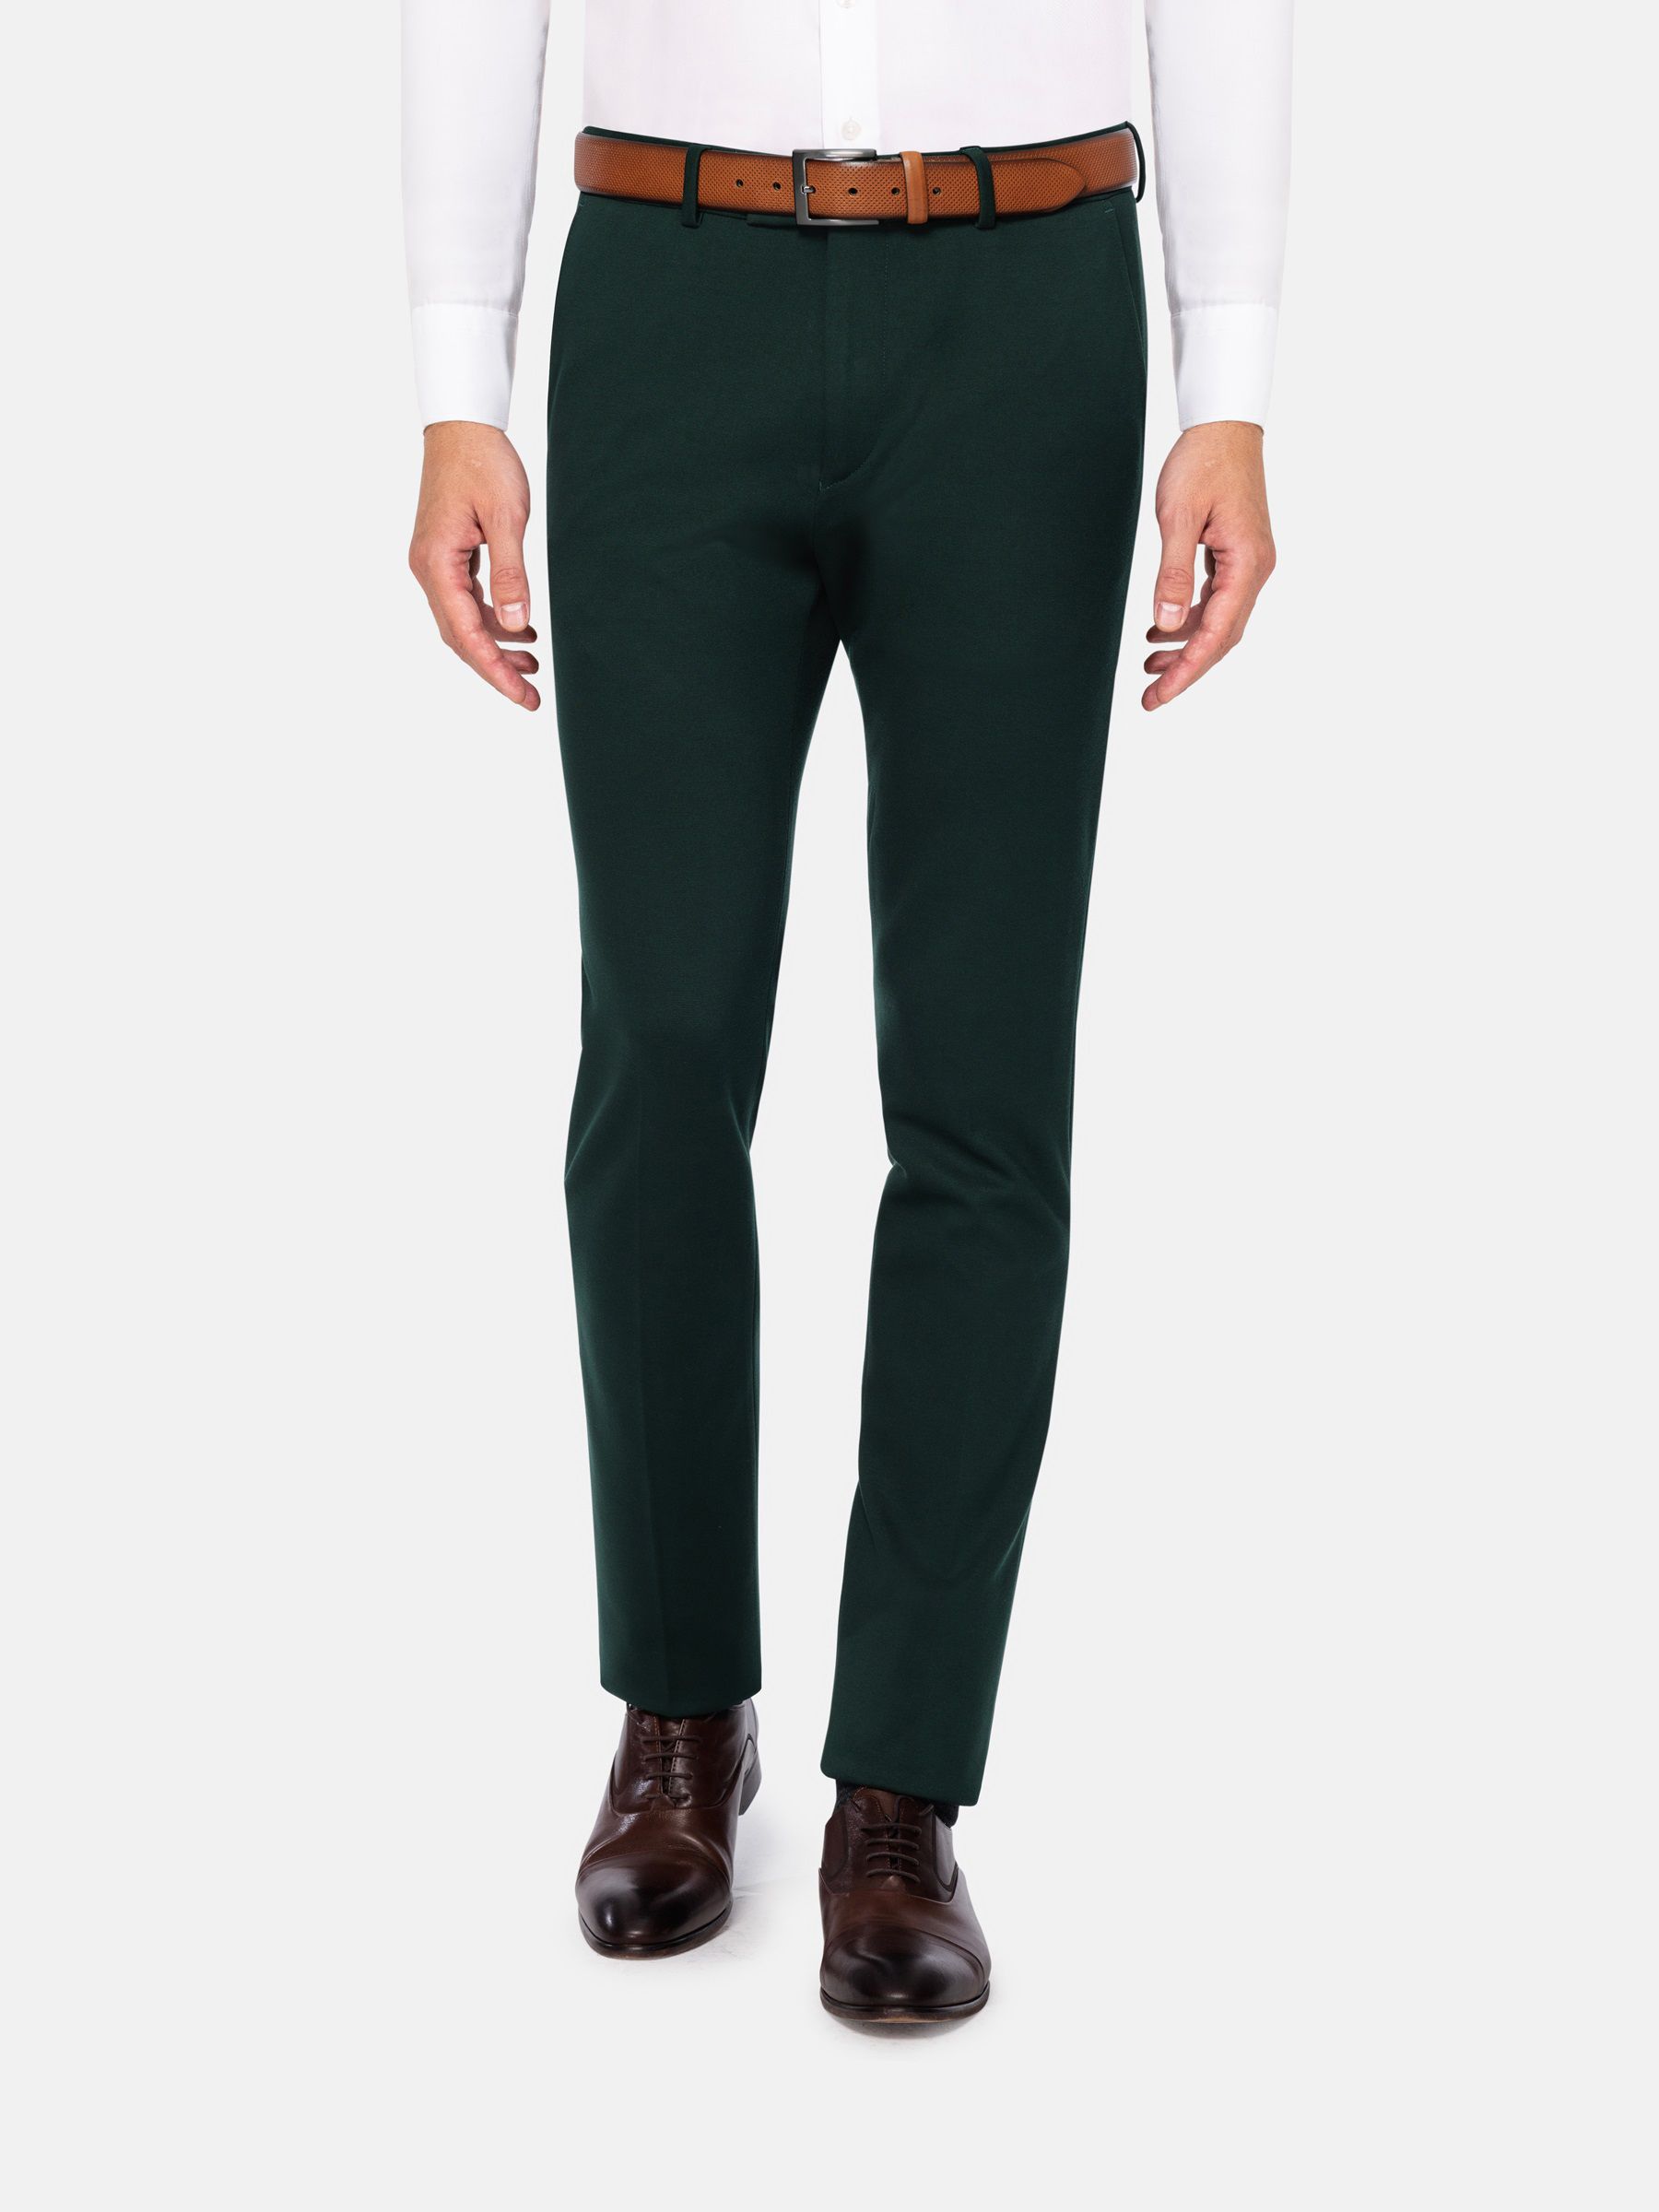 Formal Pants Online Men By Qarot Men | Men fashion casual shirts, Pants  outfit men, Formal men outfit